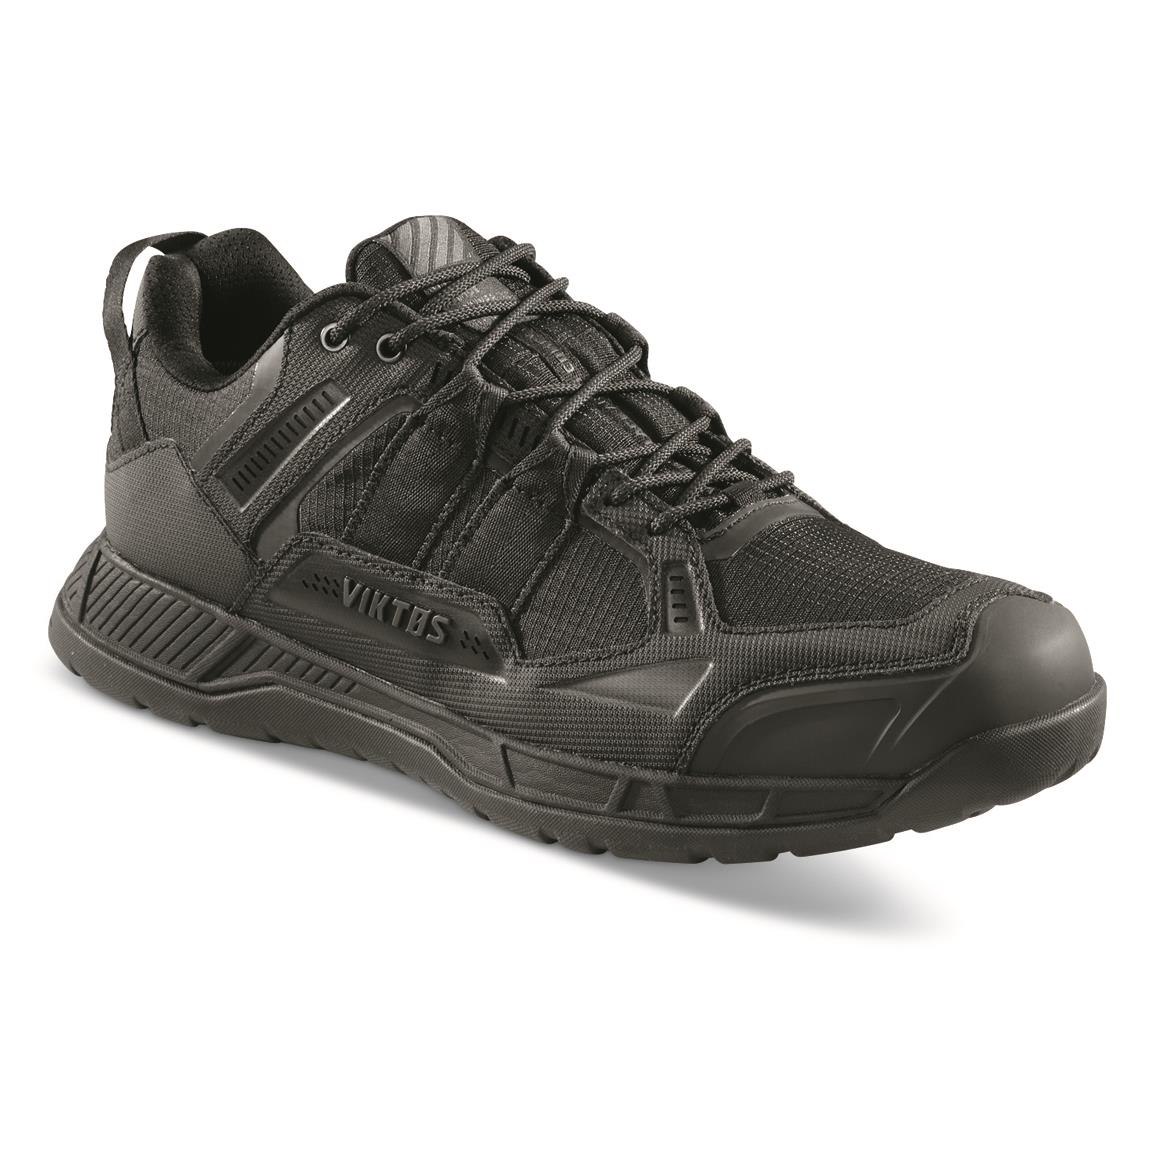 Viktos Range Trainer XC Waterproof Tactical Shoes, Black